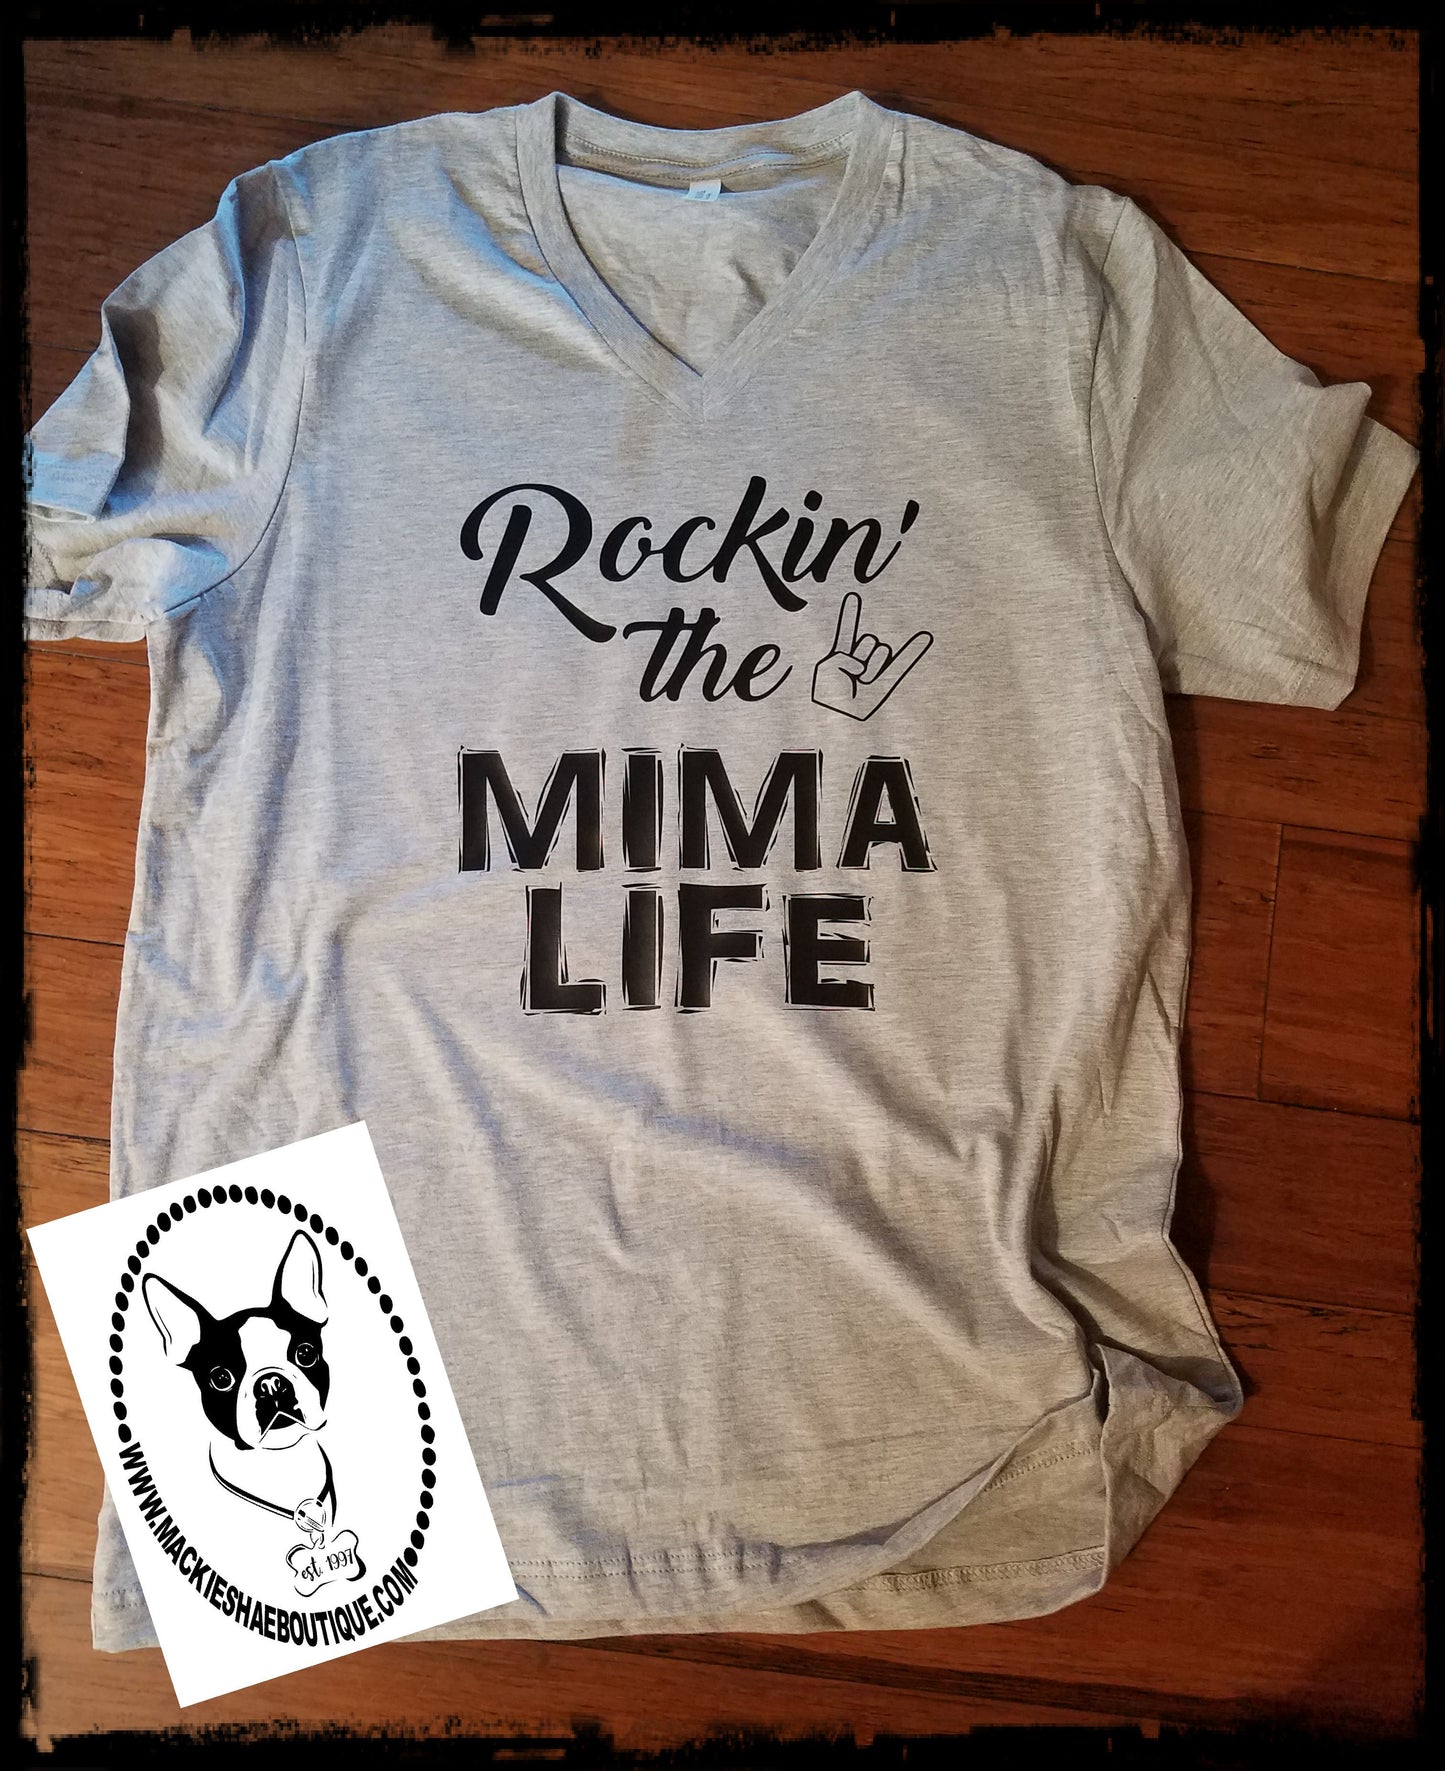 Rockin' the Mima Life (Mima can be Changed) Custom Shirt, Short Sleeve